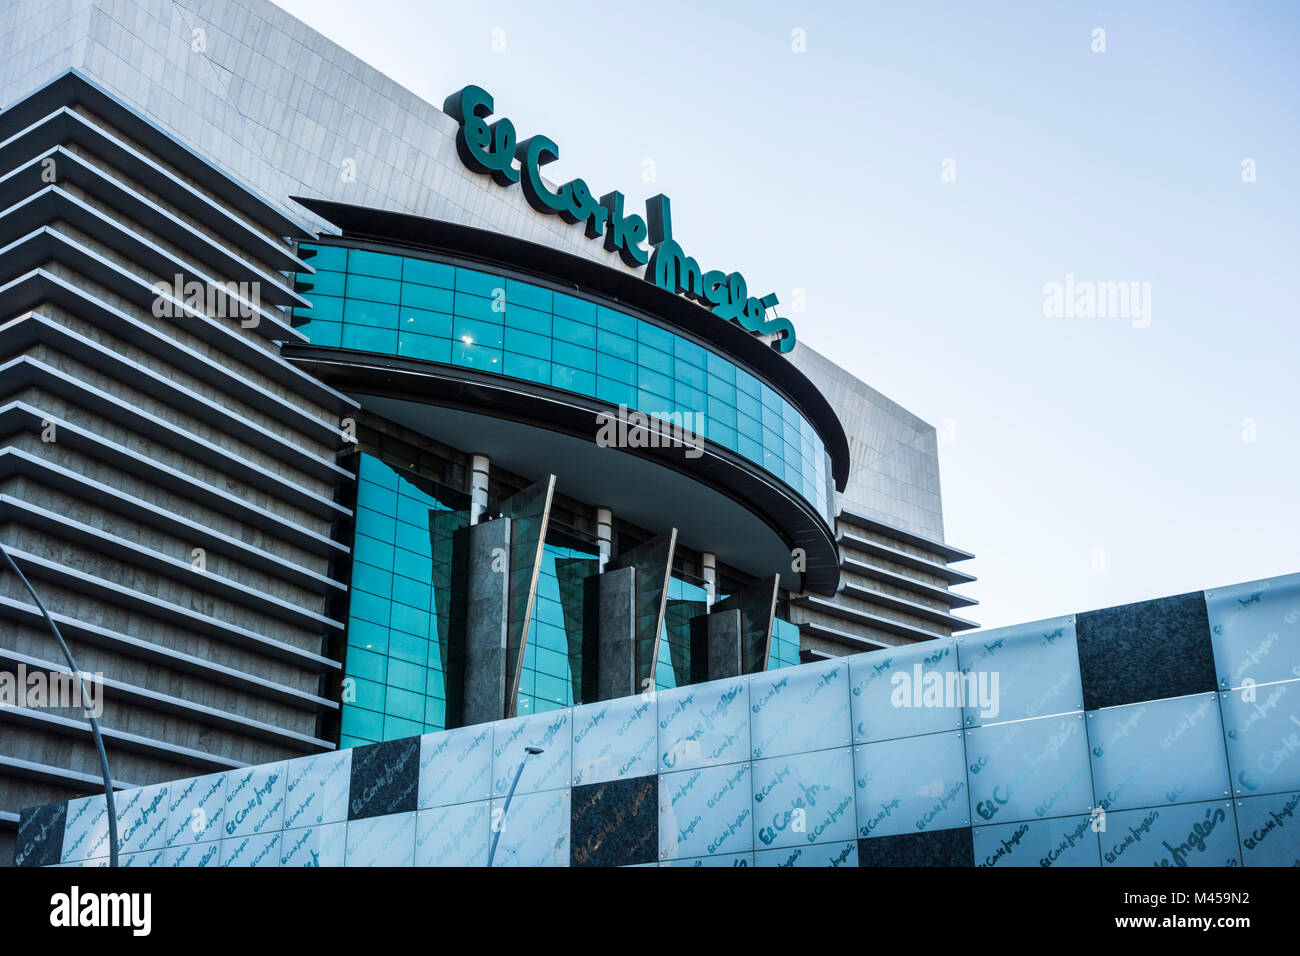 El Corte Ingles building, department store. Castellon,Spain. Stock Photo